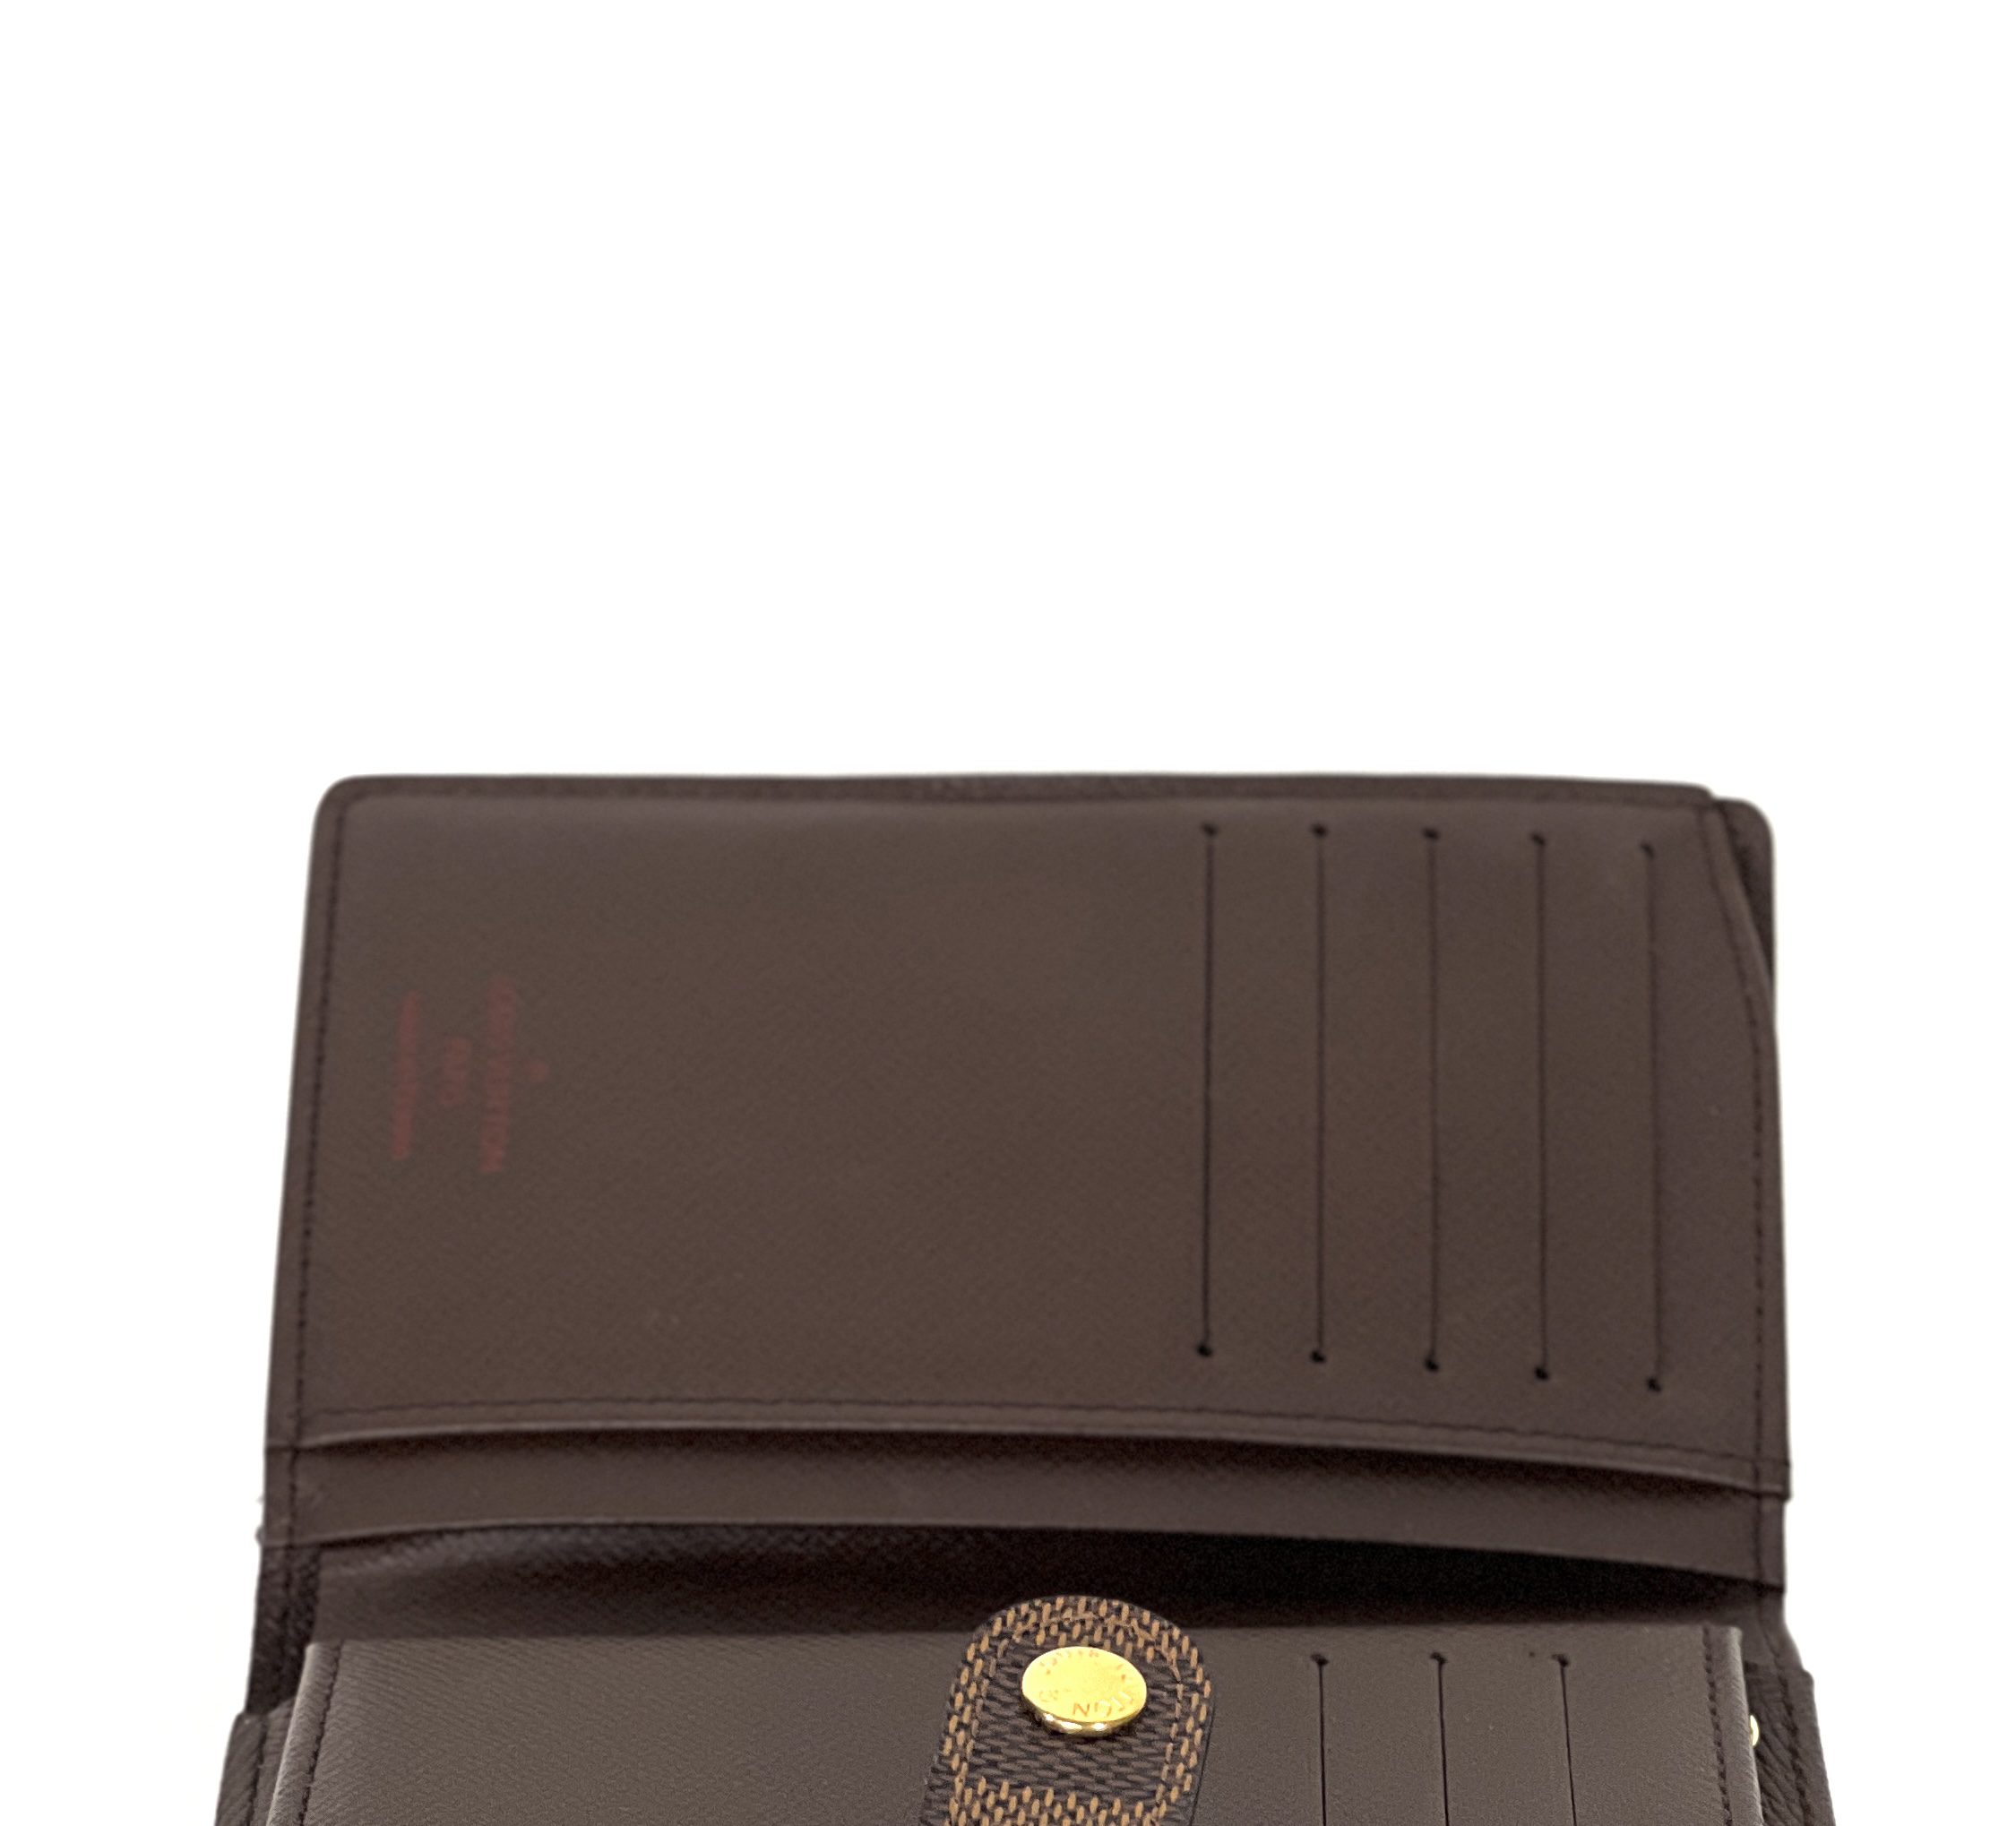 Authentic Louis Vuitton Black EPI Leather Medium French Wallet